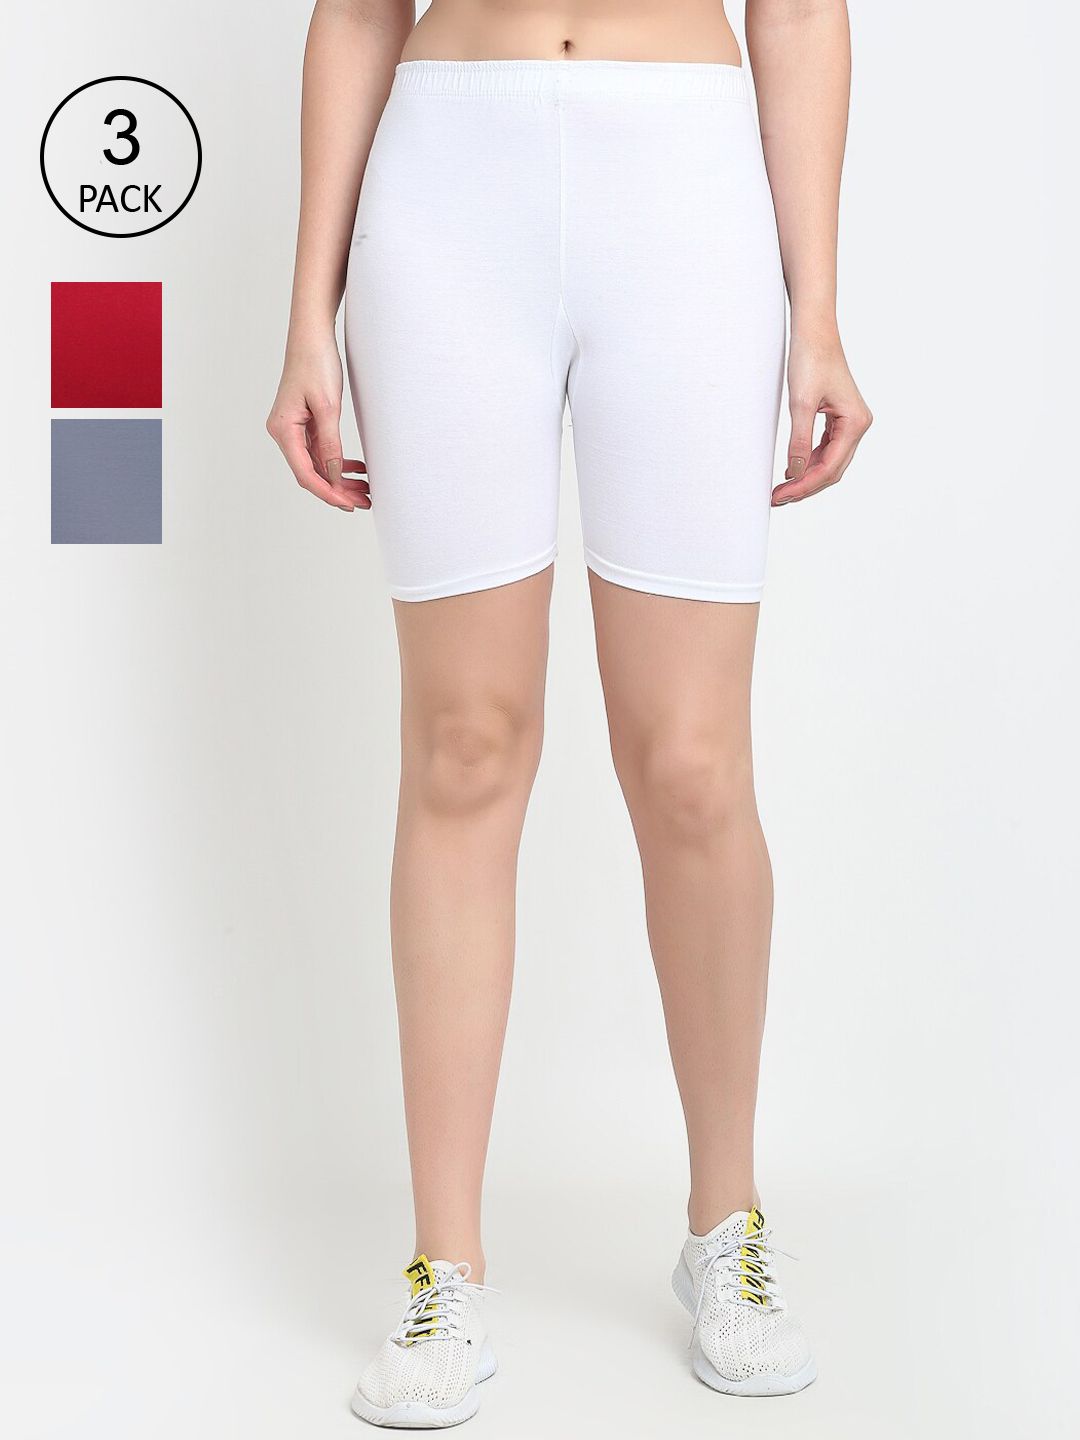 GRACIT Women Pack-3 White Biker Shorts Price in India